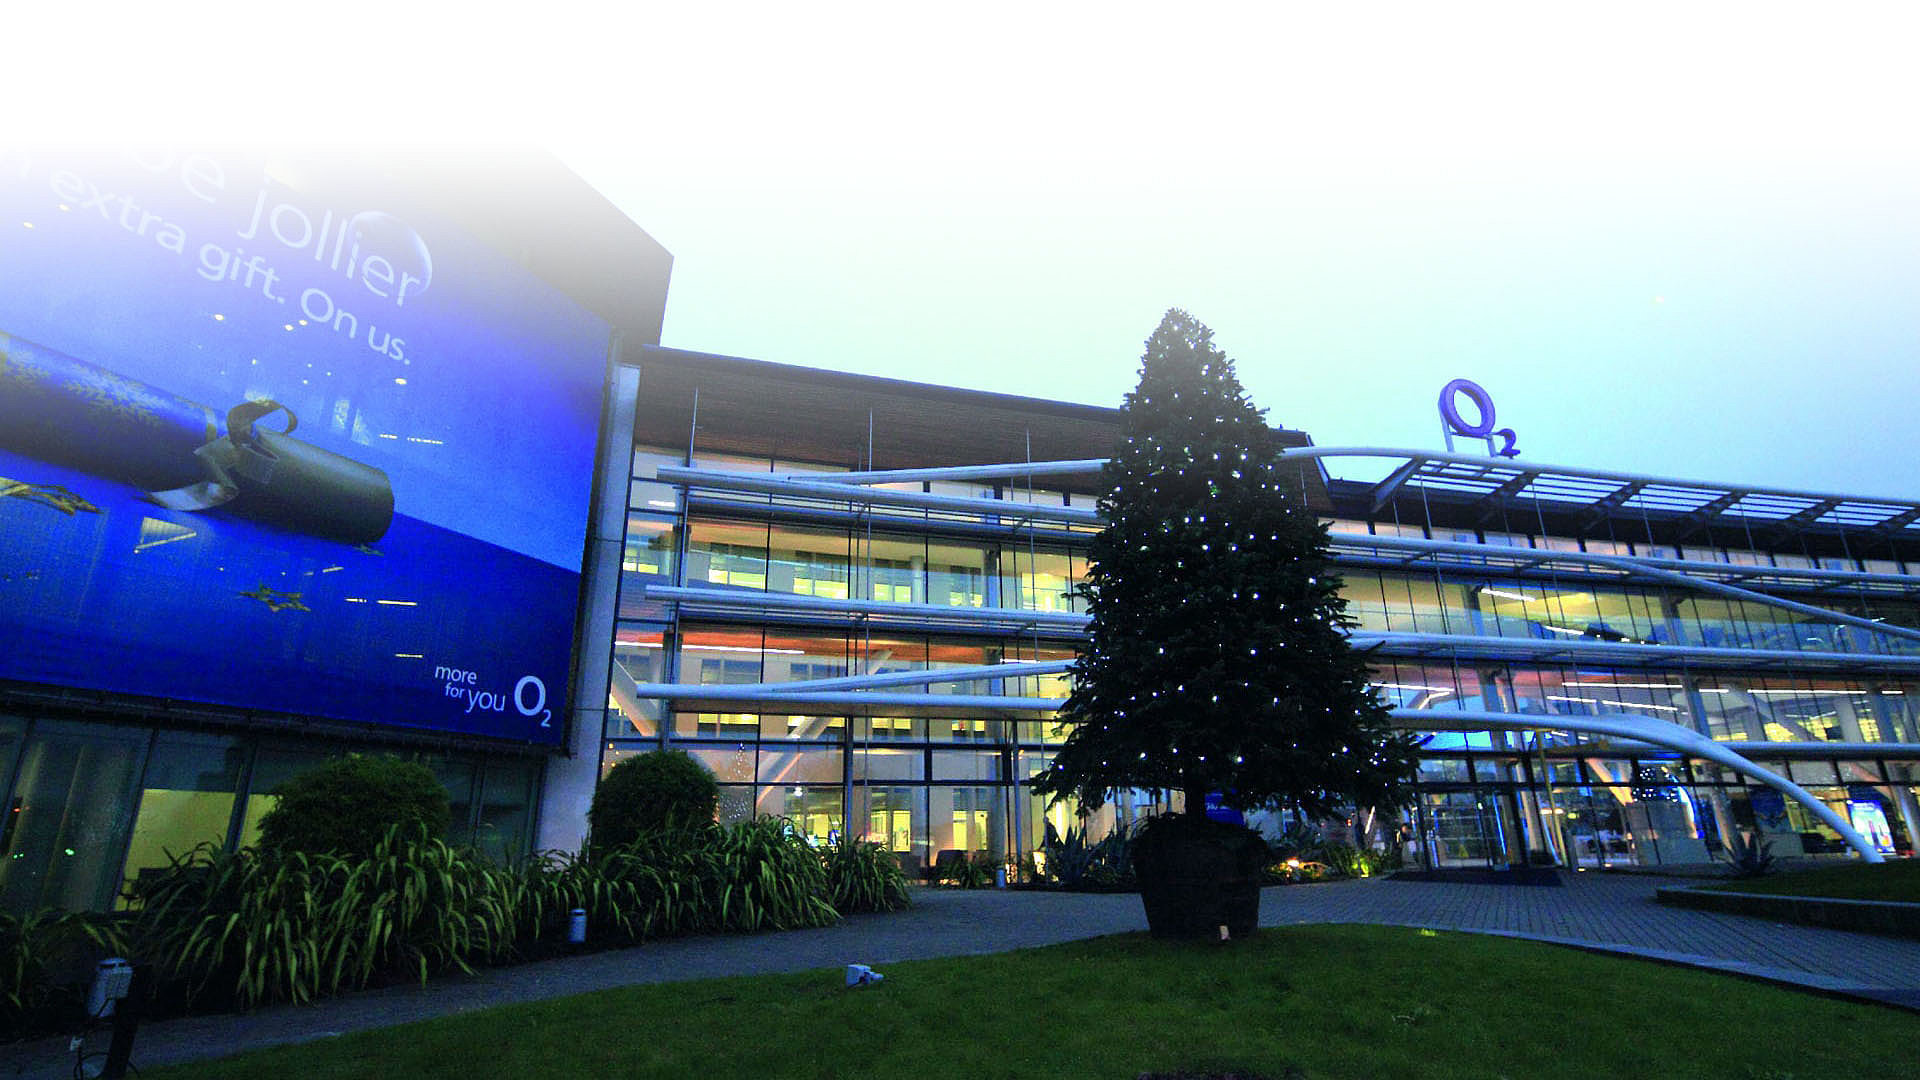 Iss O2 At Slough - Christmas Tree - HD Wallpaper 